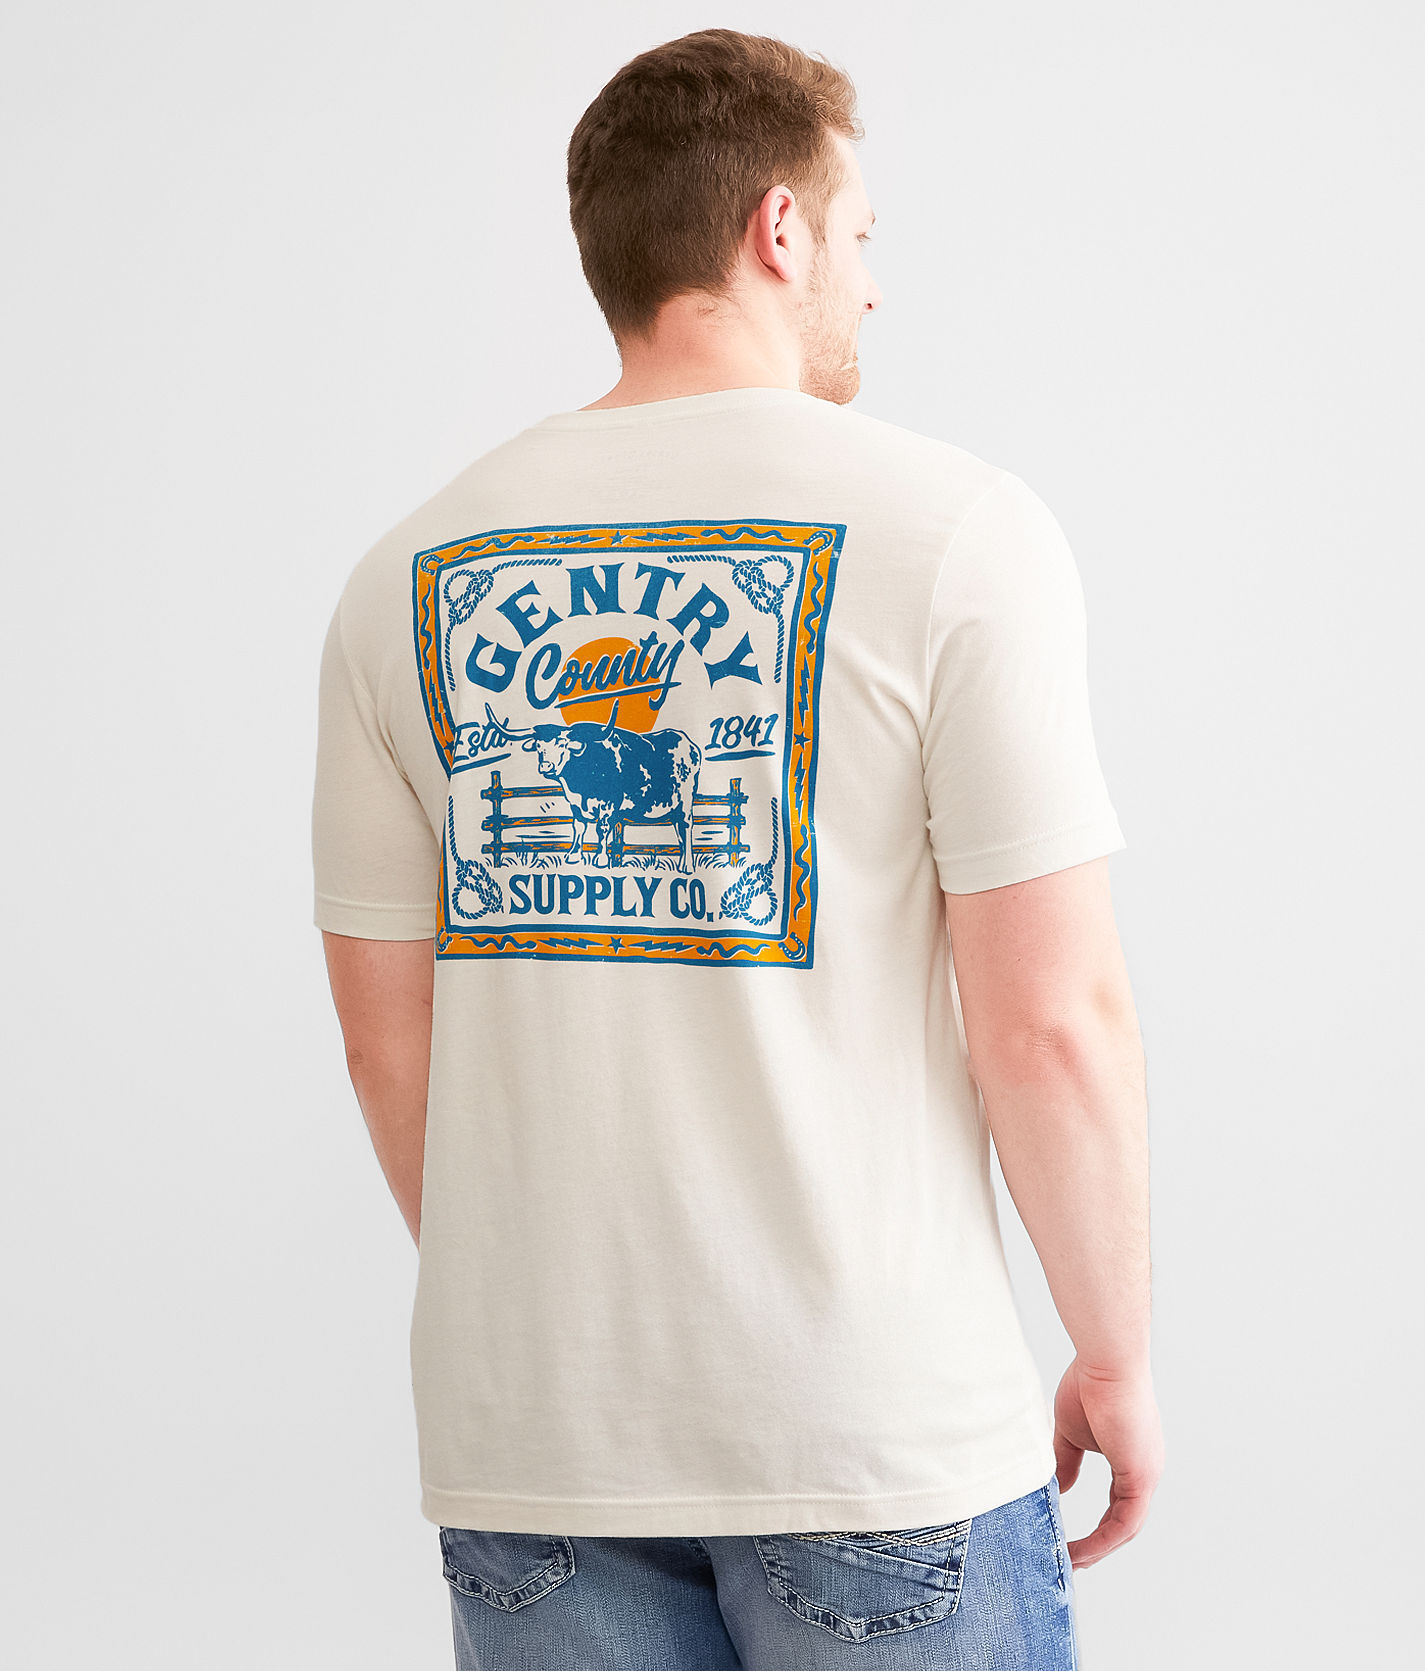 Gentry County Western Bandana T-Shirt  - Cream - male - Size: Medium